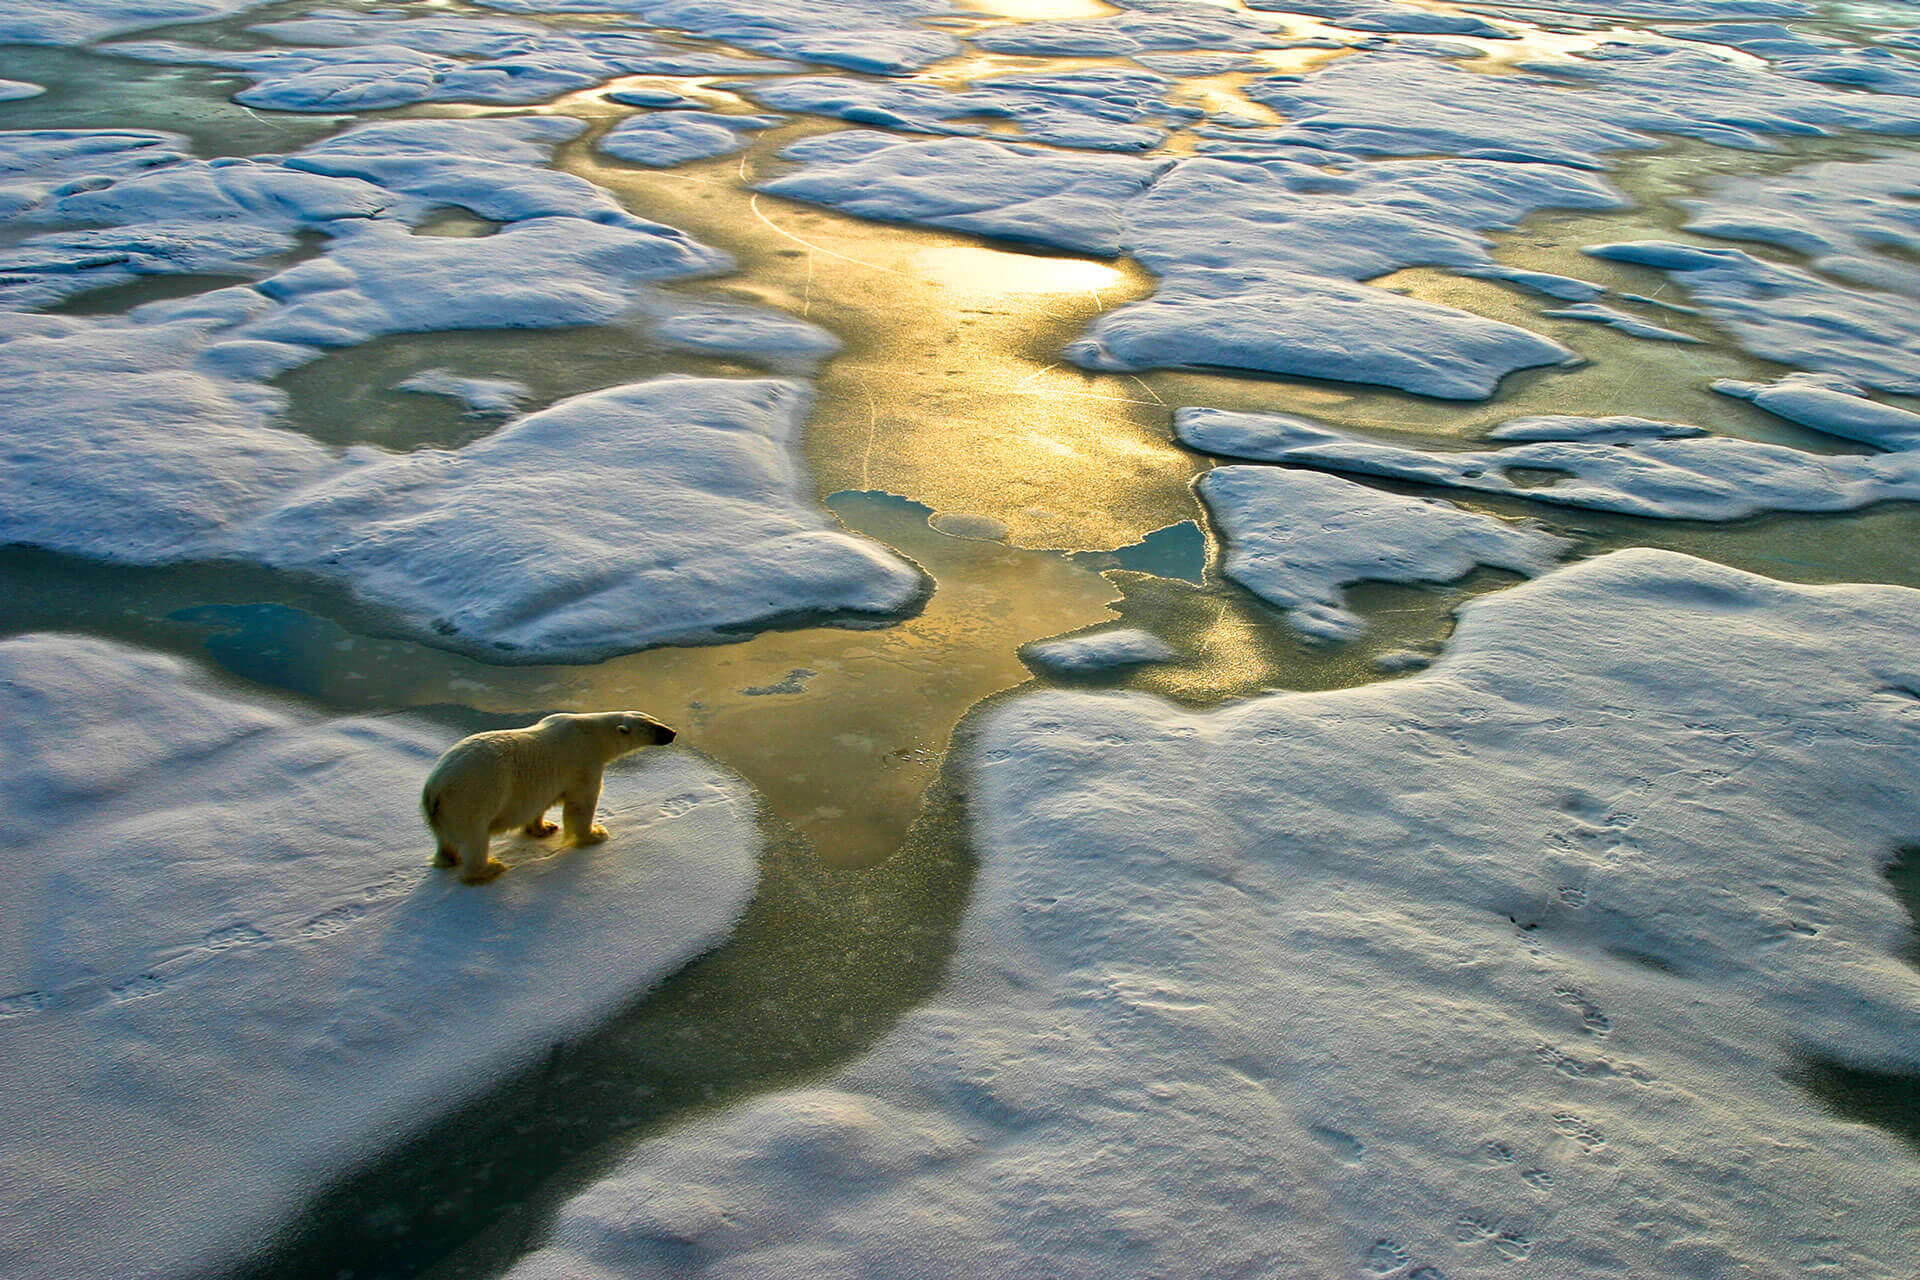 bbva-cambio-climatico-oso-polar-medioambiente-cuidado-planeta-deshielo